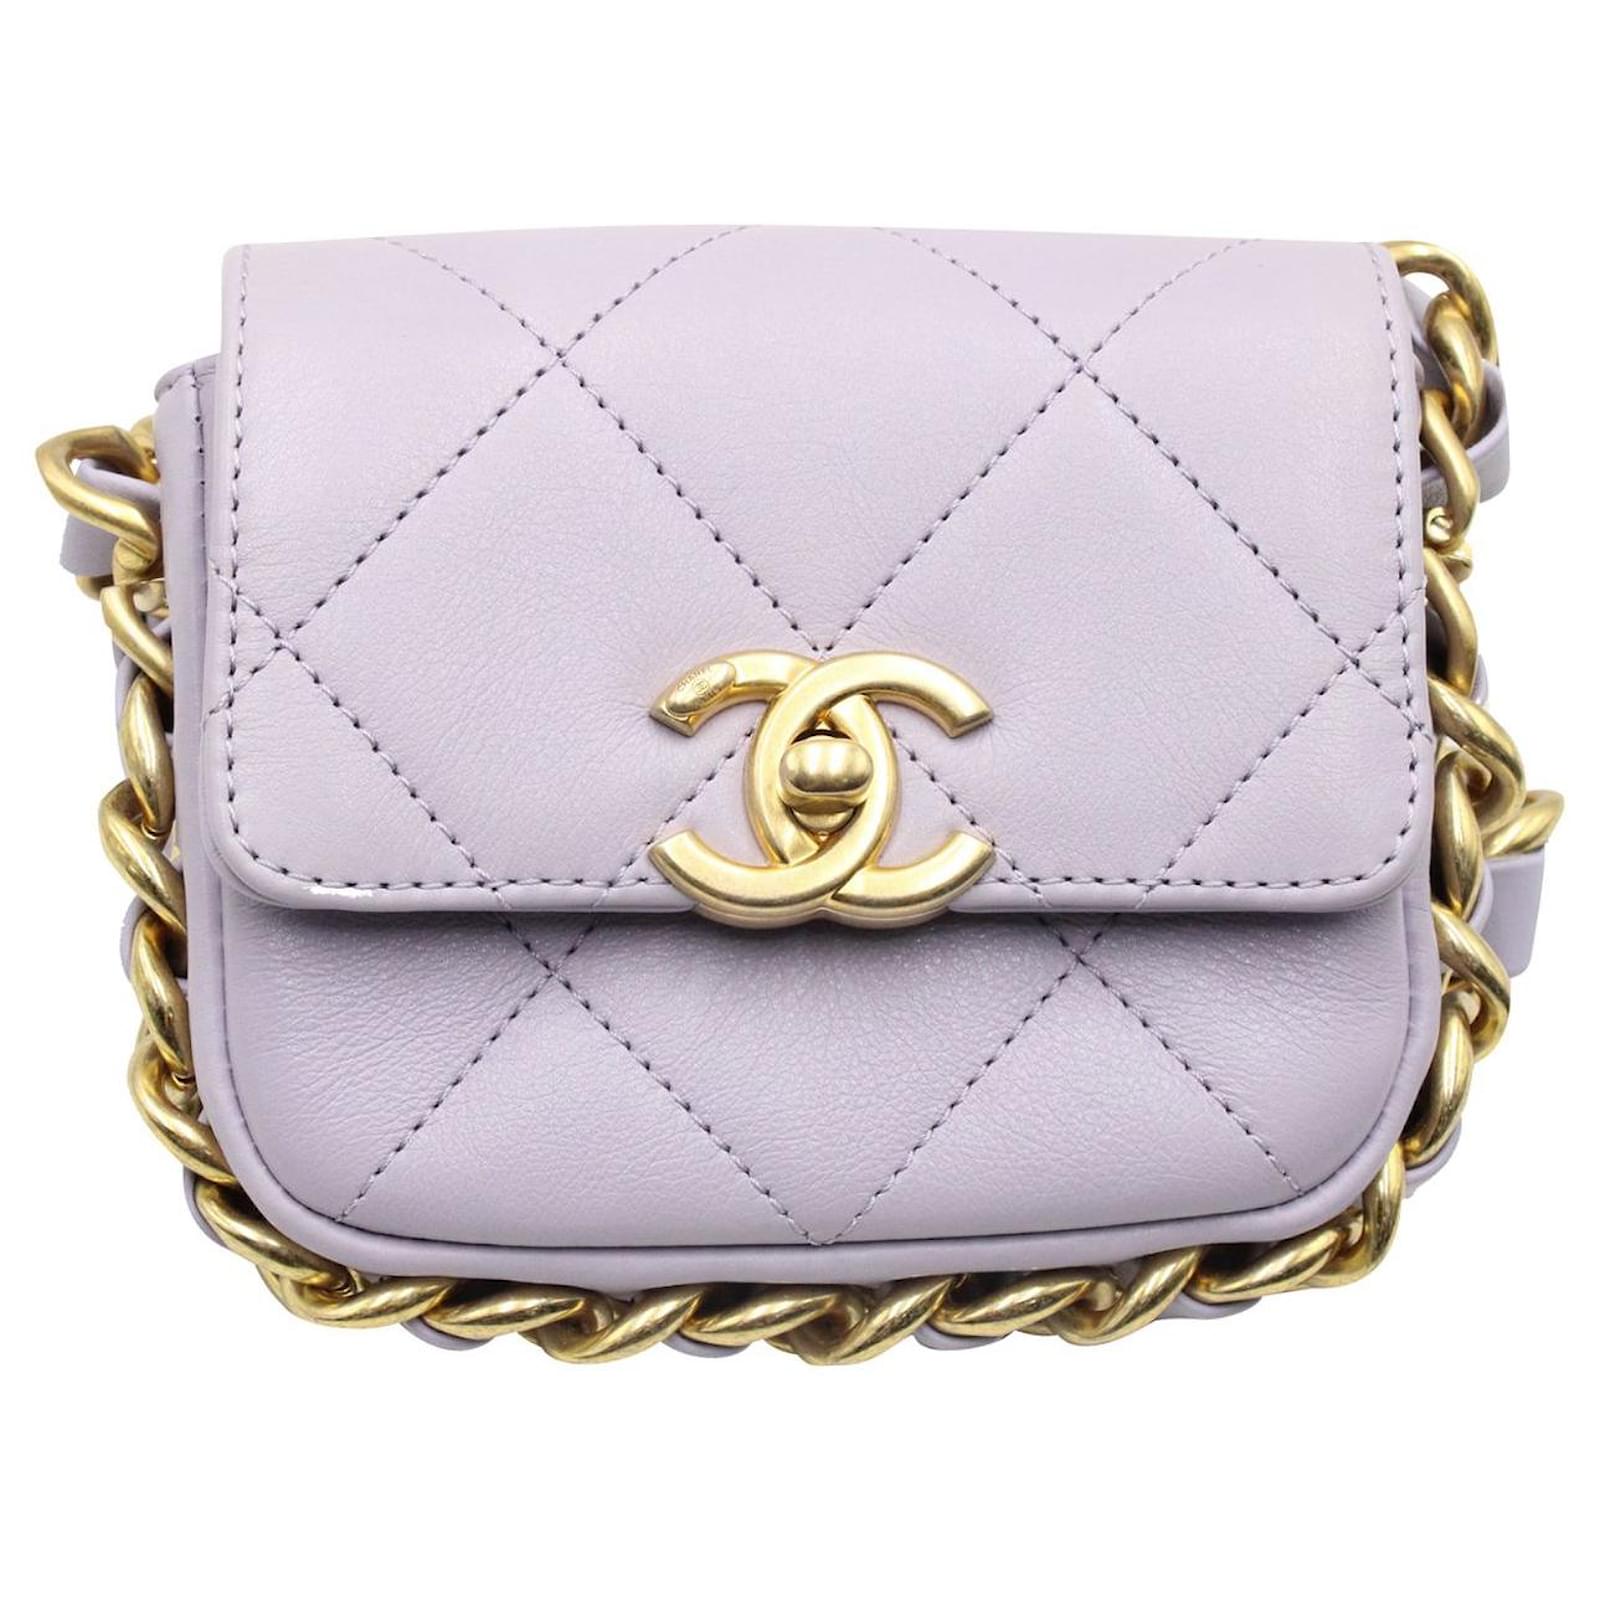 Handbags Chanel Chanel Mini Framing Chain Flap Bag in Purple Leather Size Unique Inter